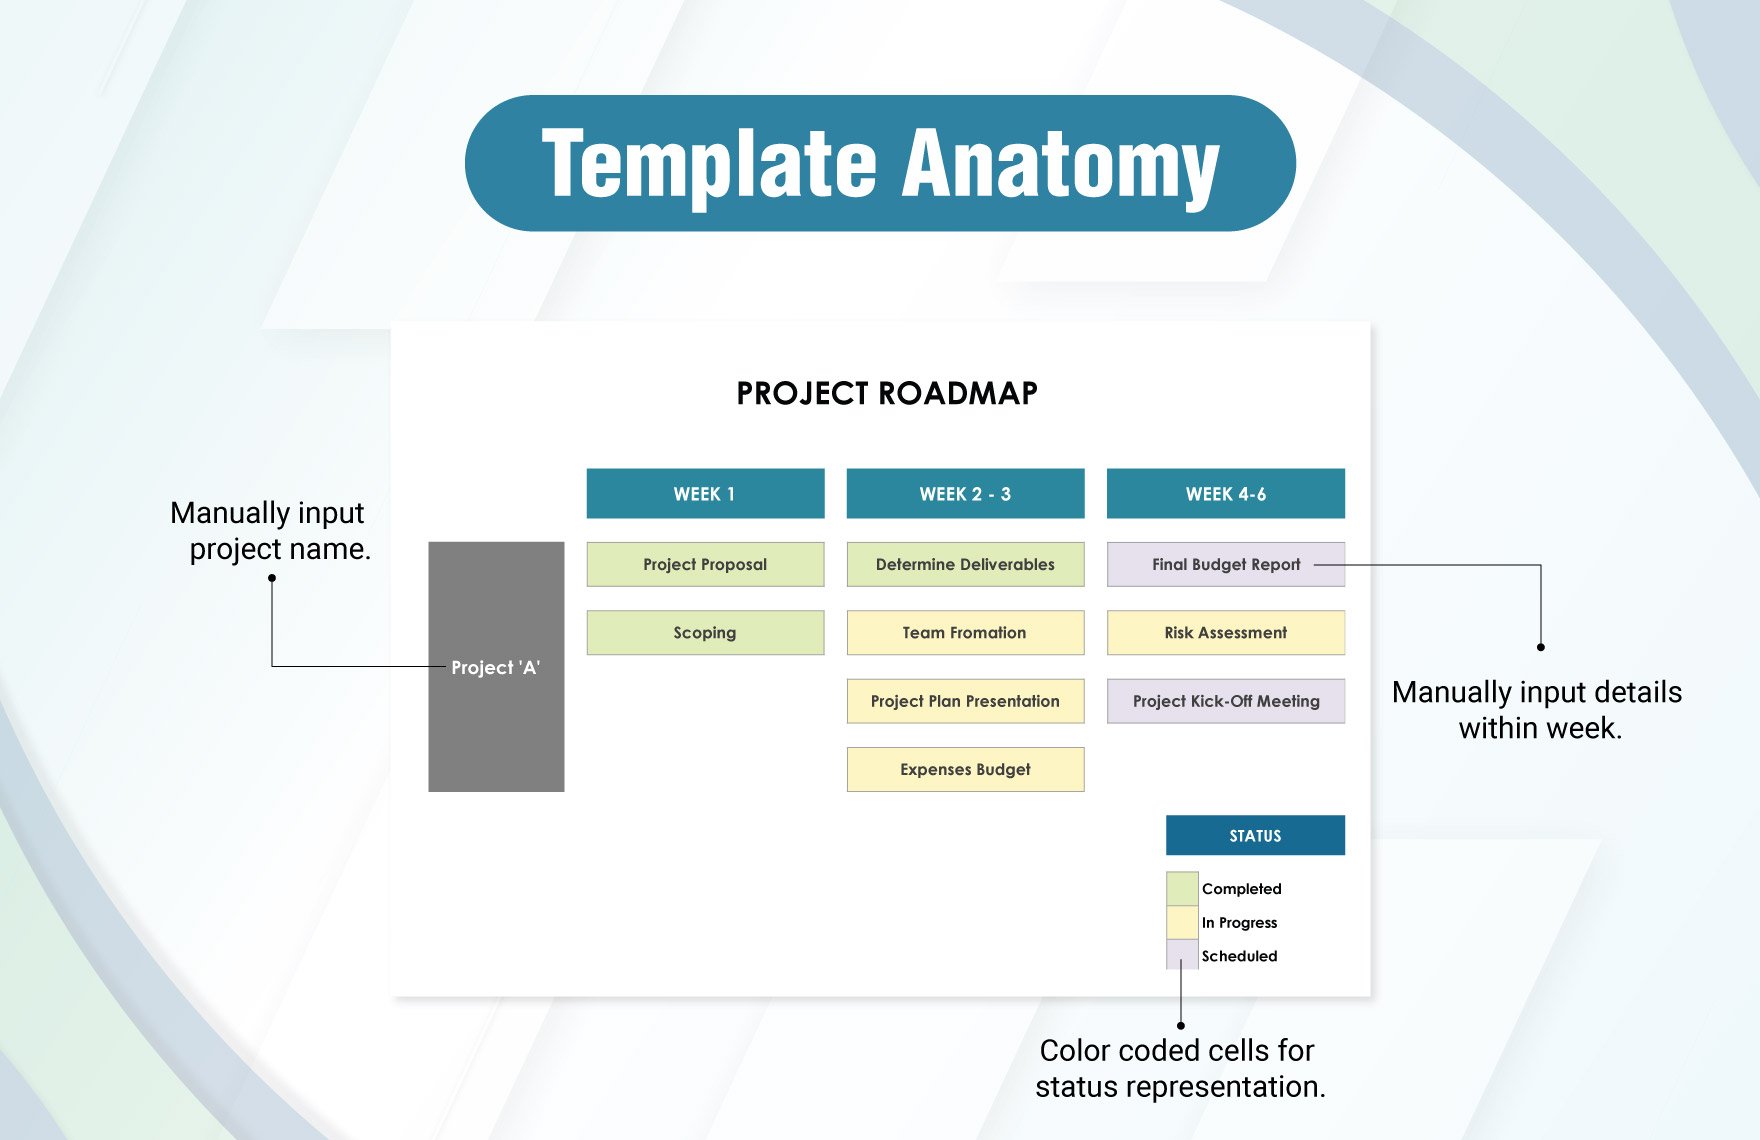 Sample Project Roadmap Template